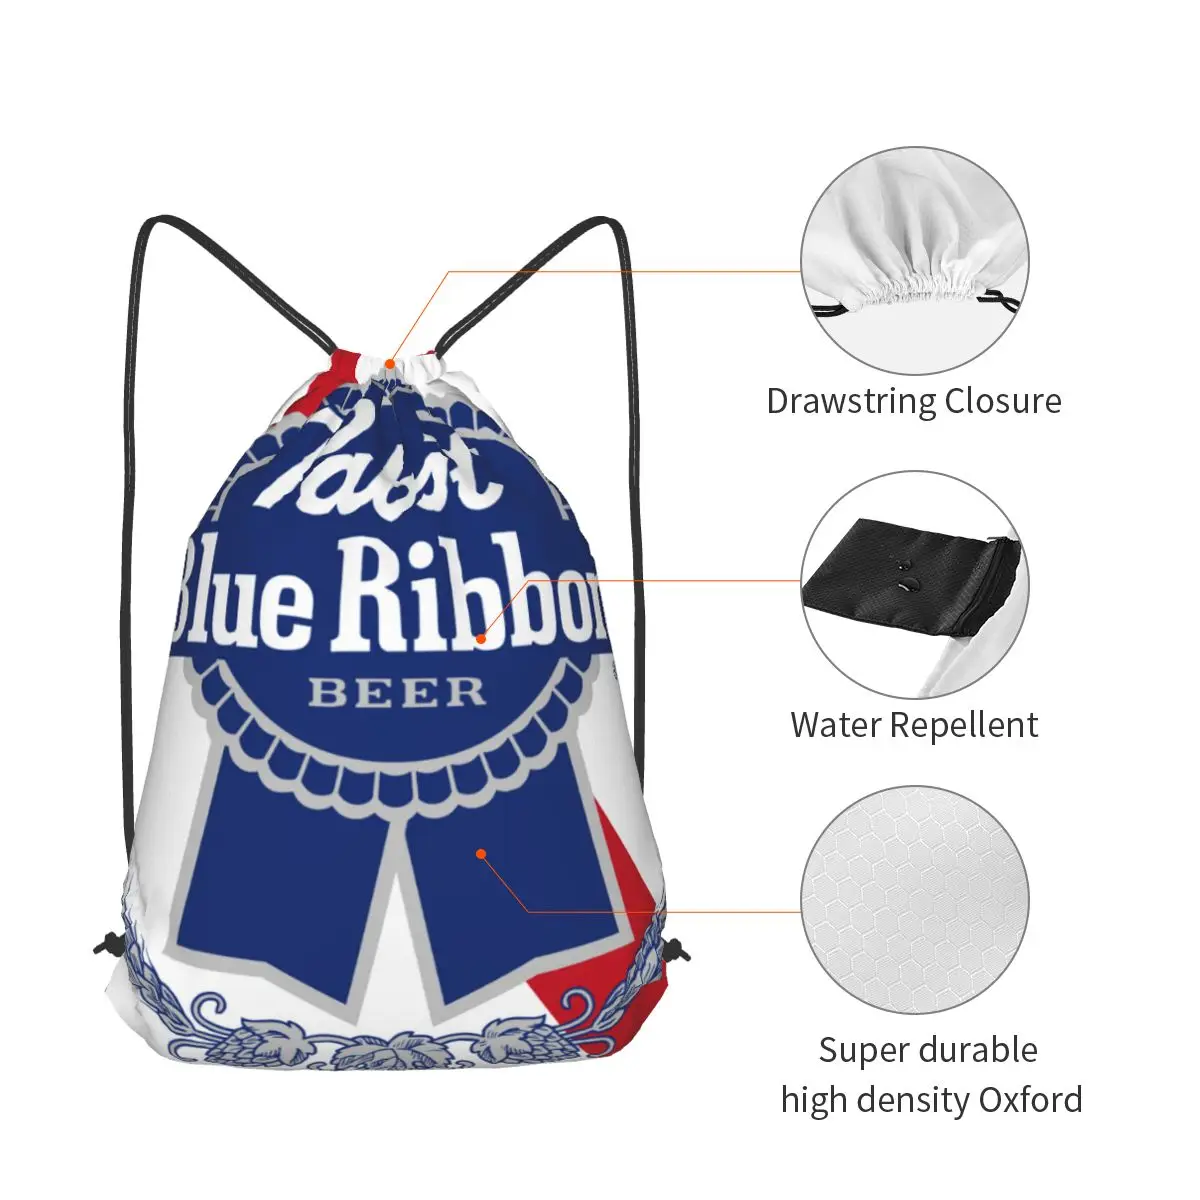 Рюкзак на шнурке с логотипом пива Pabst Blue Ribbon, мужская спортивная сумка для занятий в тренажерном зале, рюкзак для занятий йогой, рюкзак для женщин